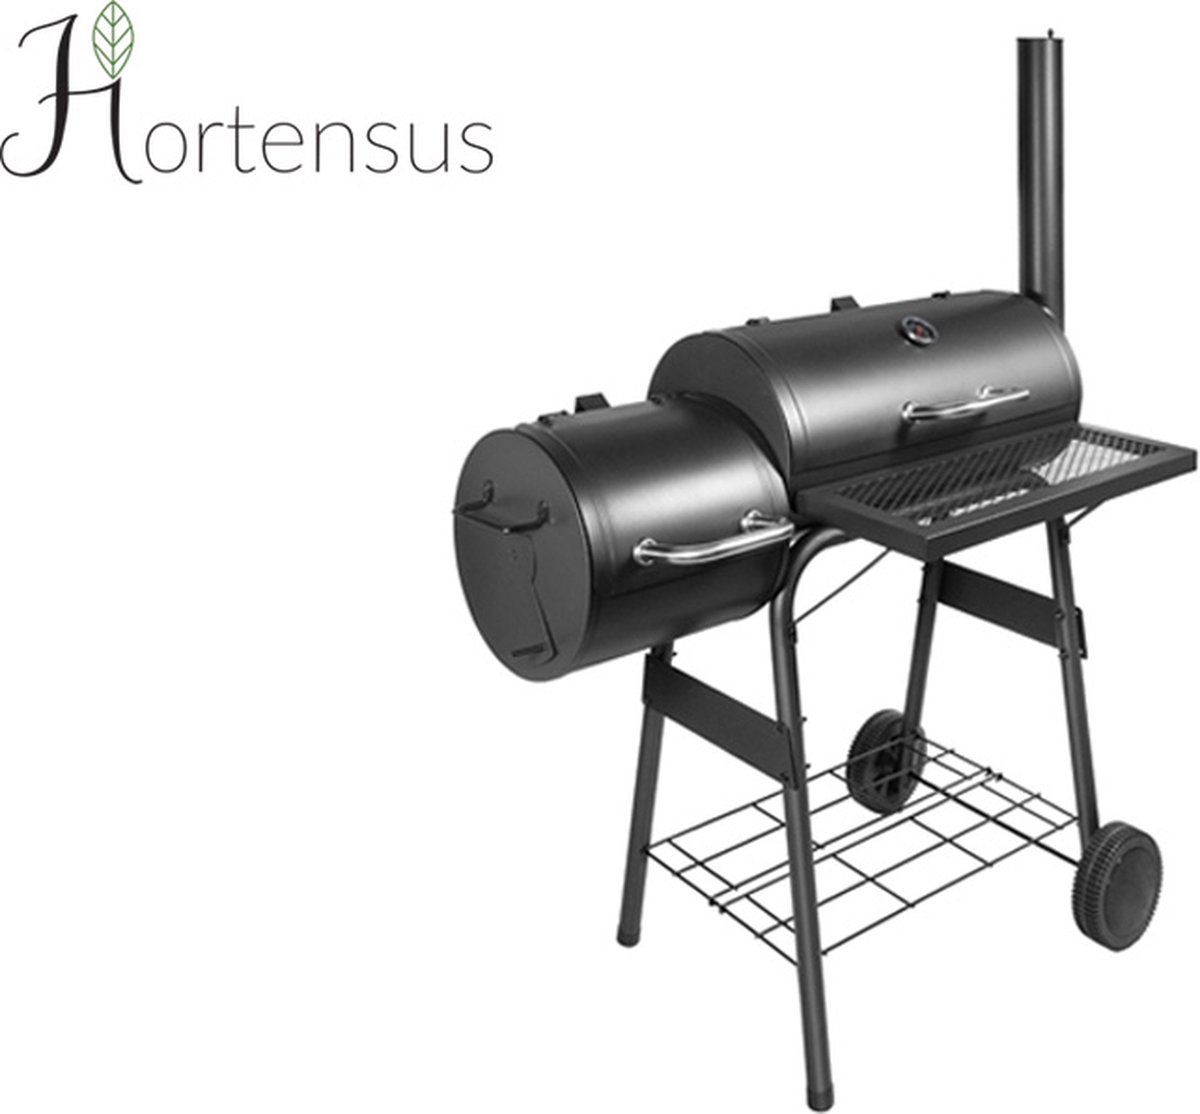 Hortensus BBQ smoker - barbecue - houtskool grill - Houtskool Barbecue - Bbq - Grill - Luxe Barbecue - Houtskool - Smoker - Zwart